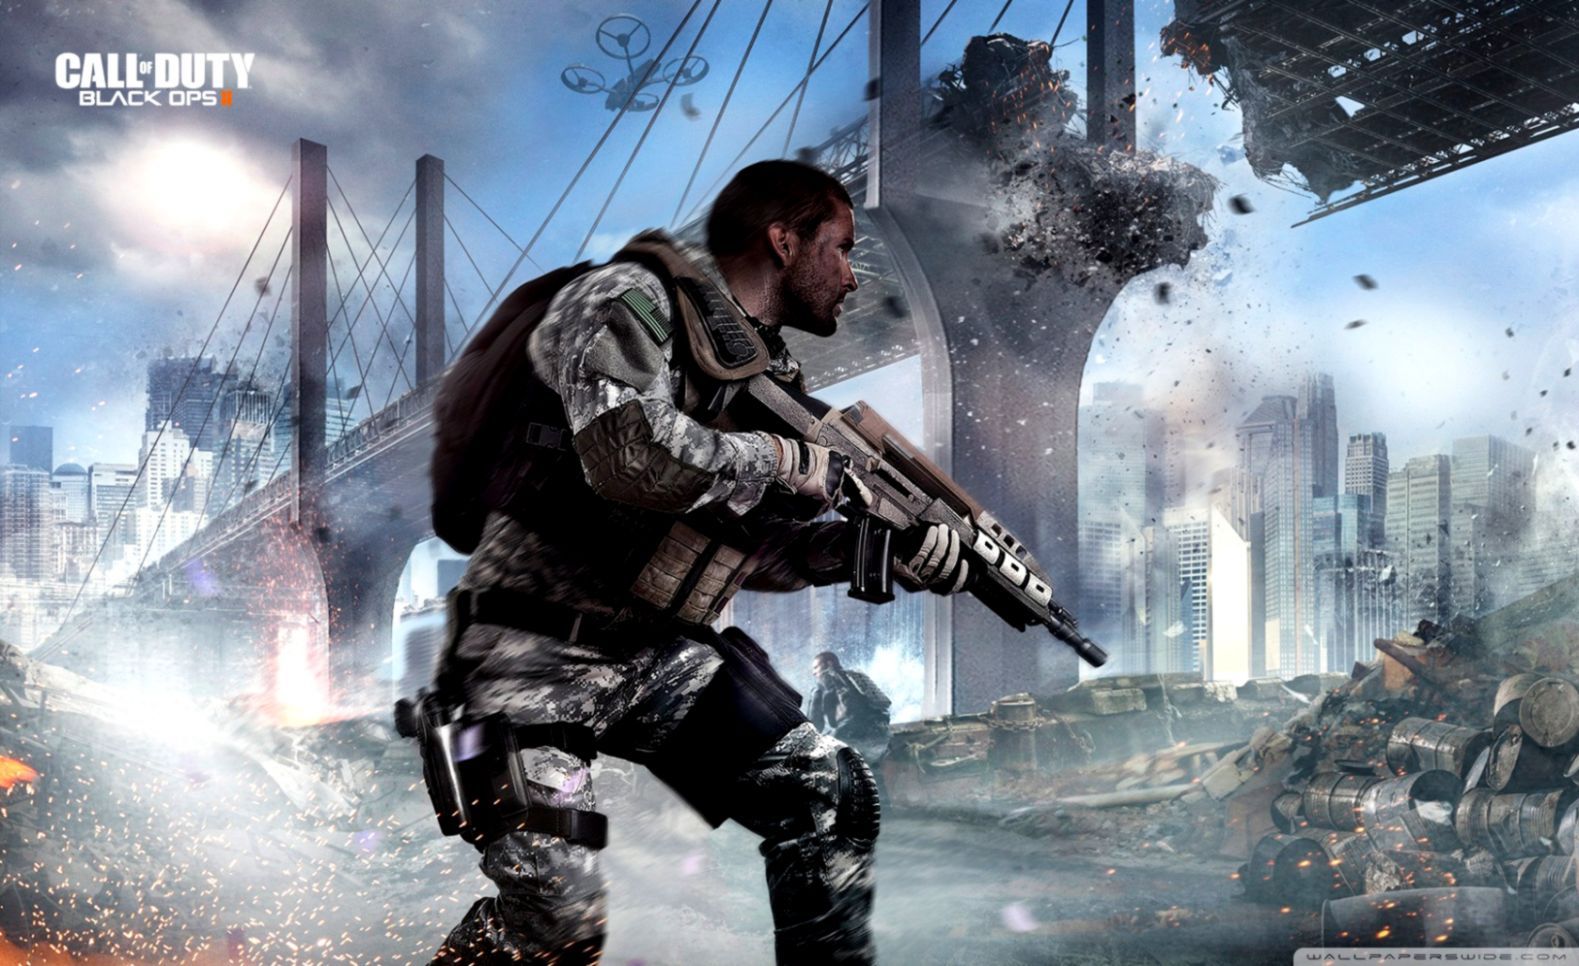 Call Of Duty Black Ops 2 11 09 10 Fondos de pantalla | Nombres de fondos de pantalla